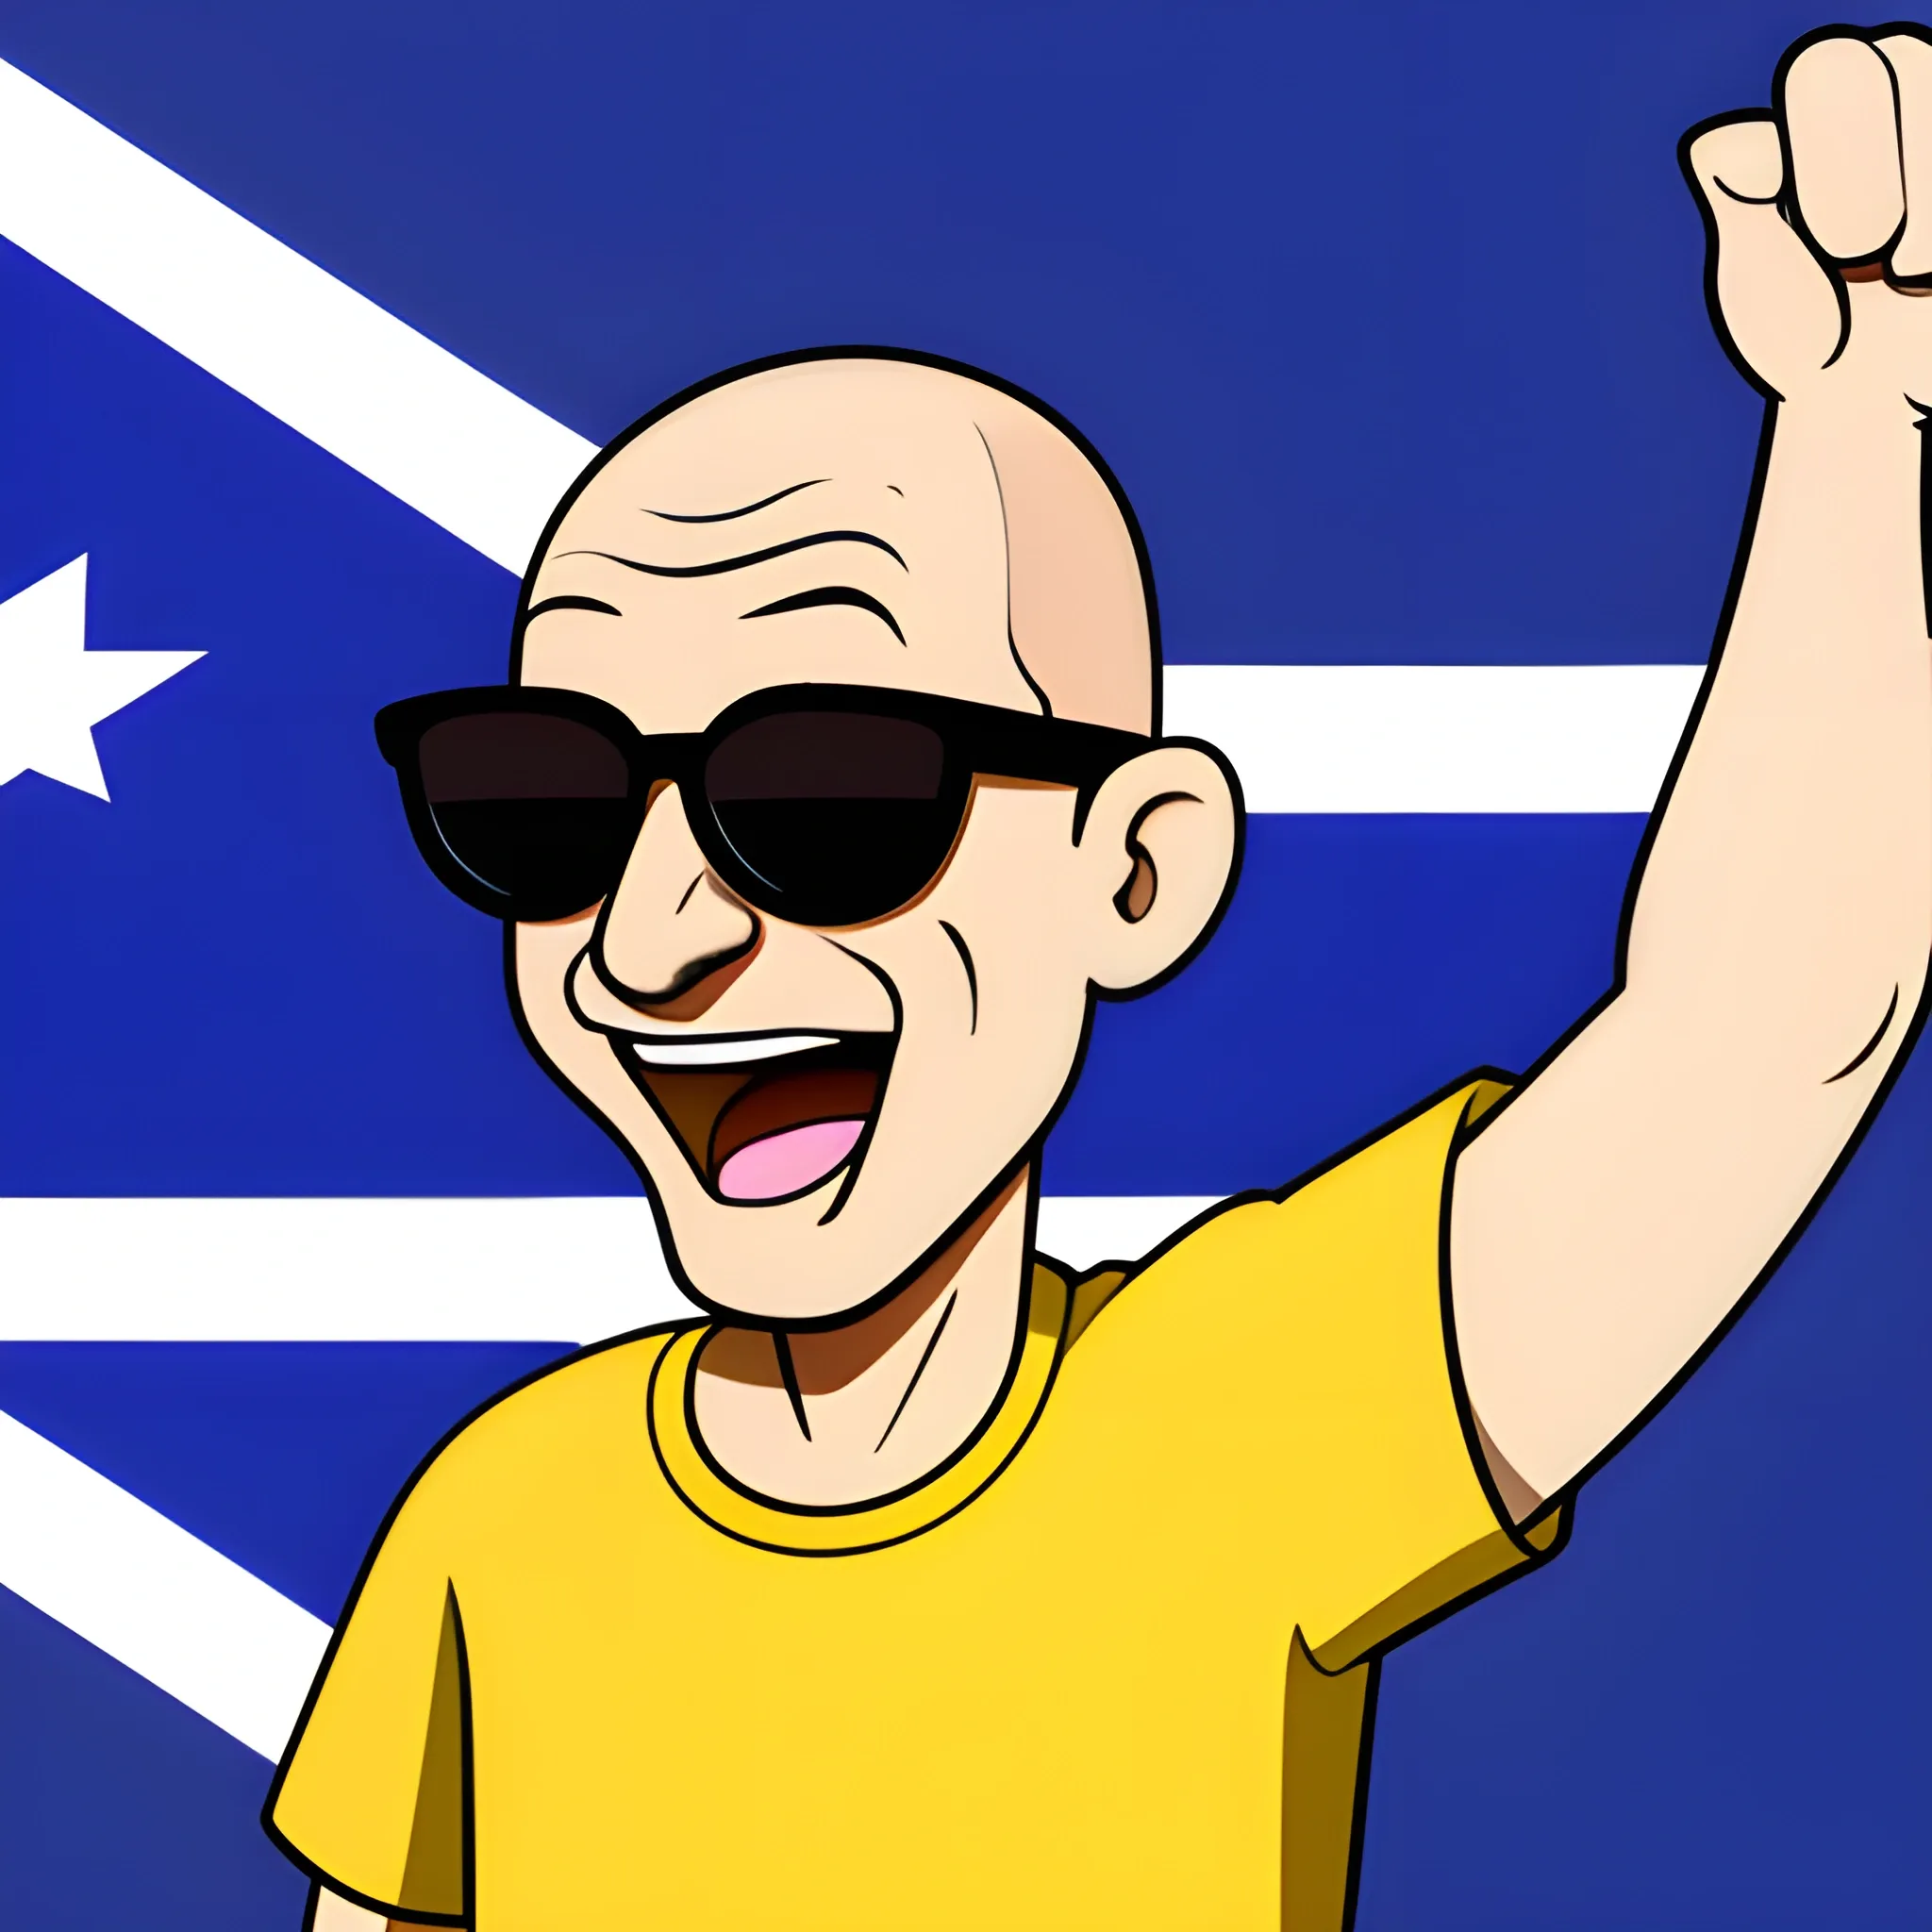 , Cartoon bald guy with sunglasses yelling with austrailian flag